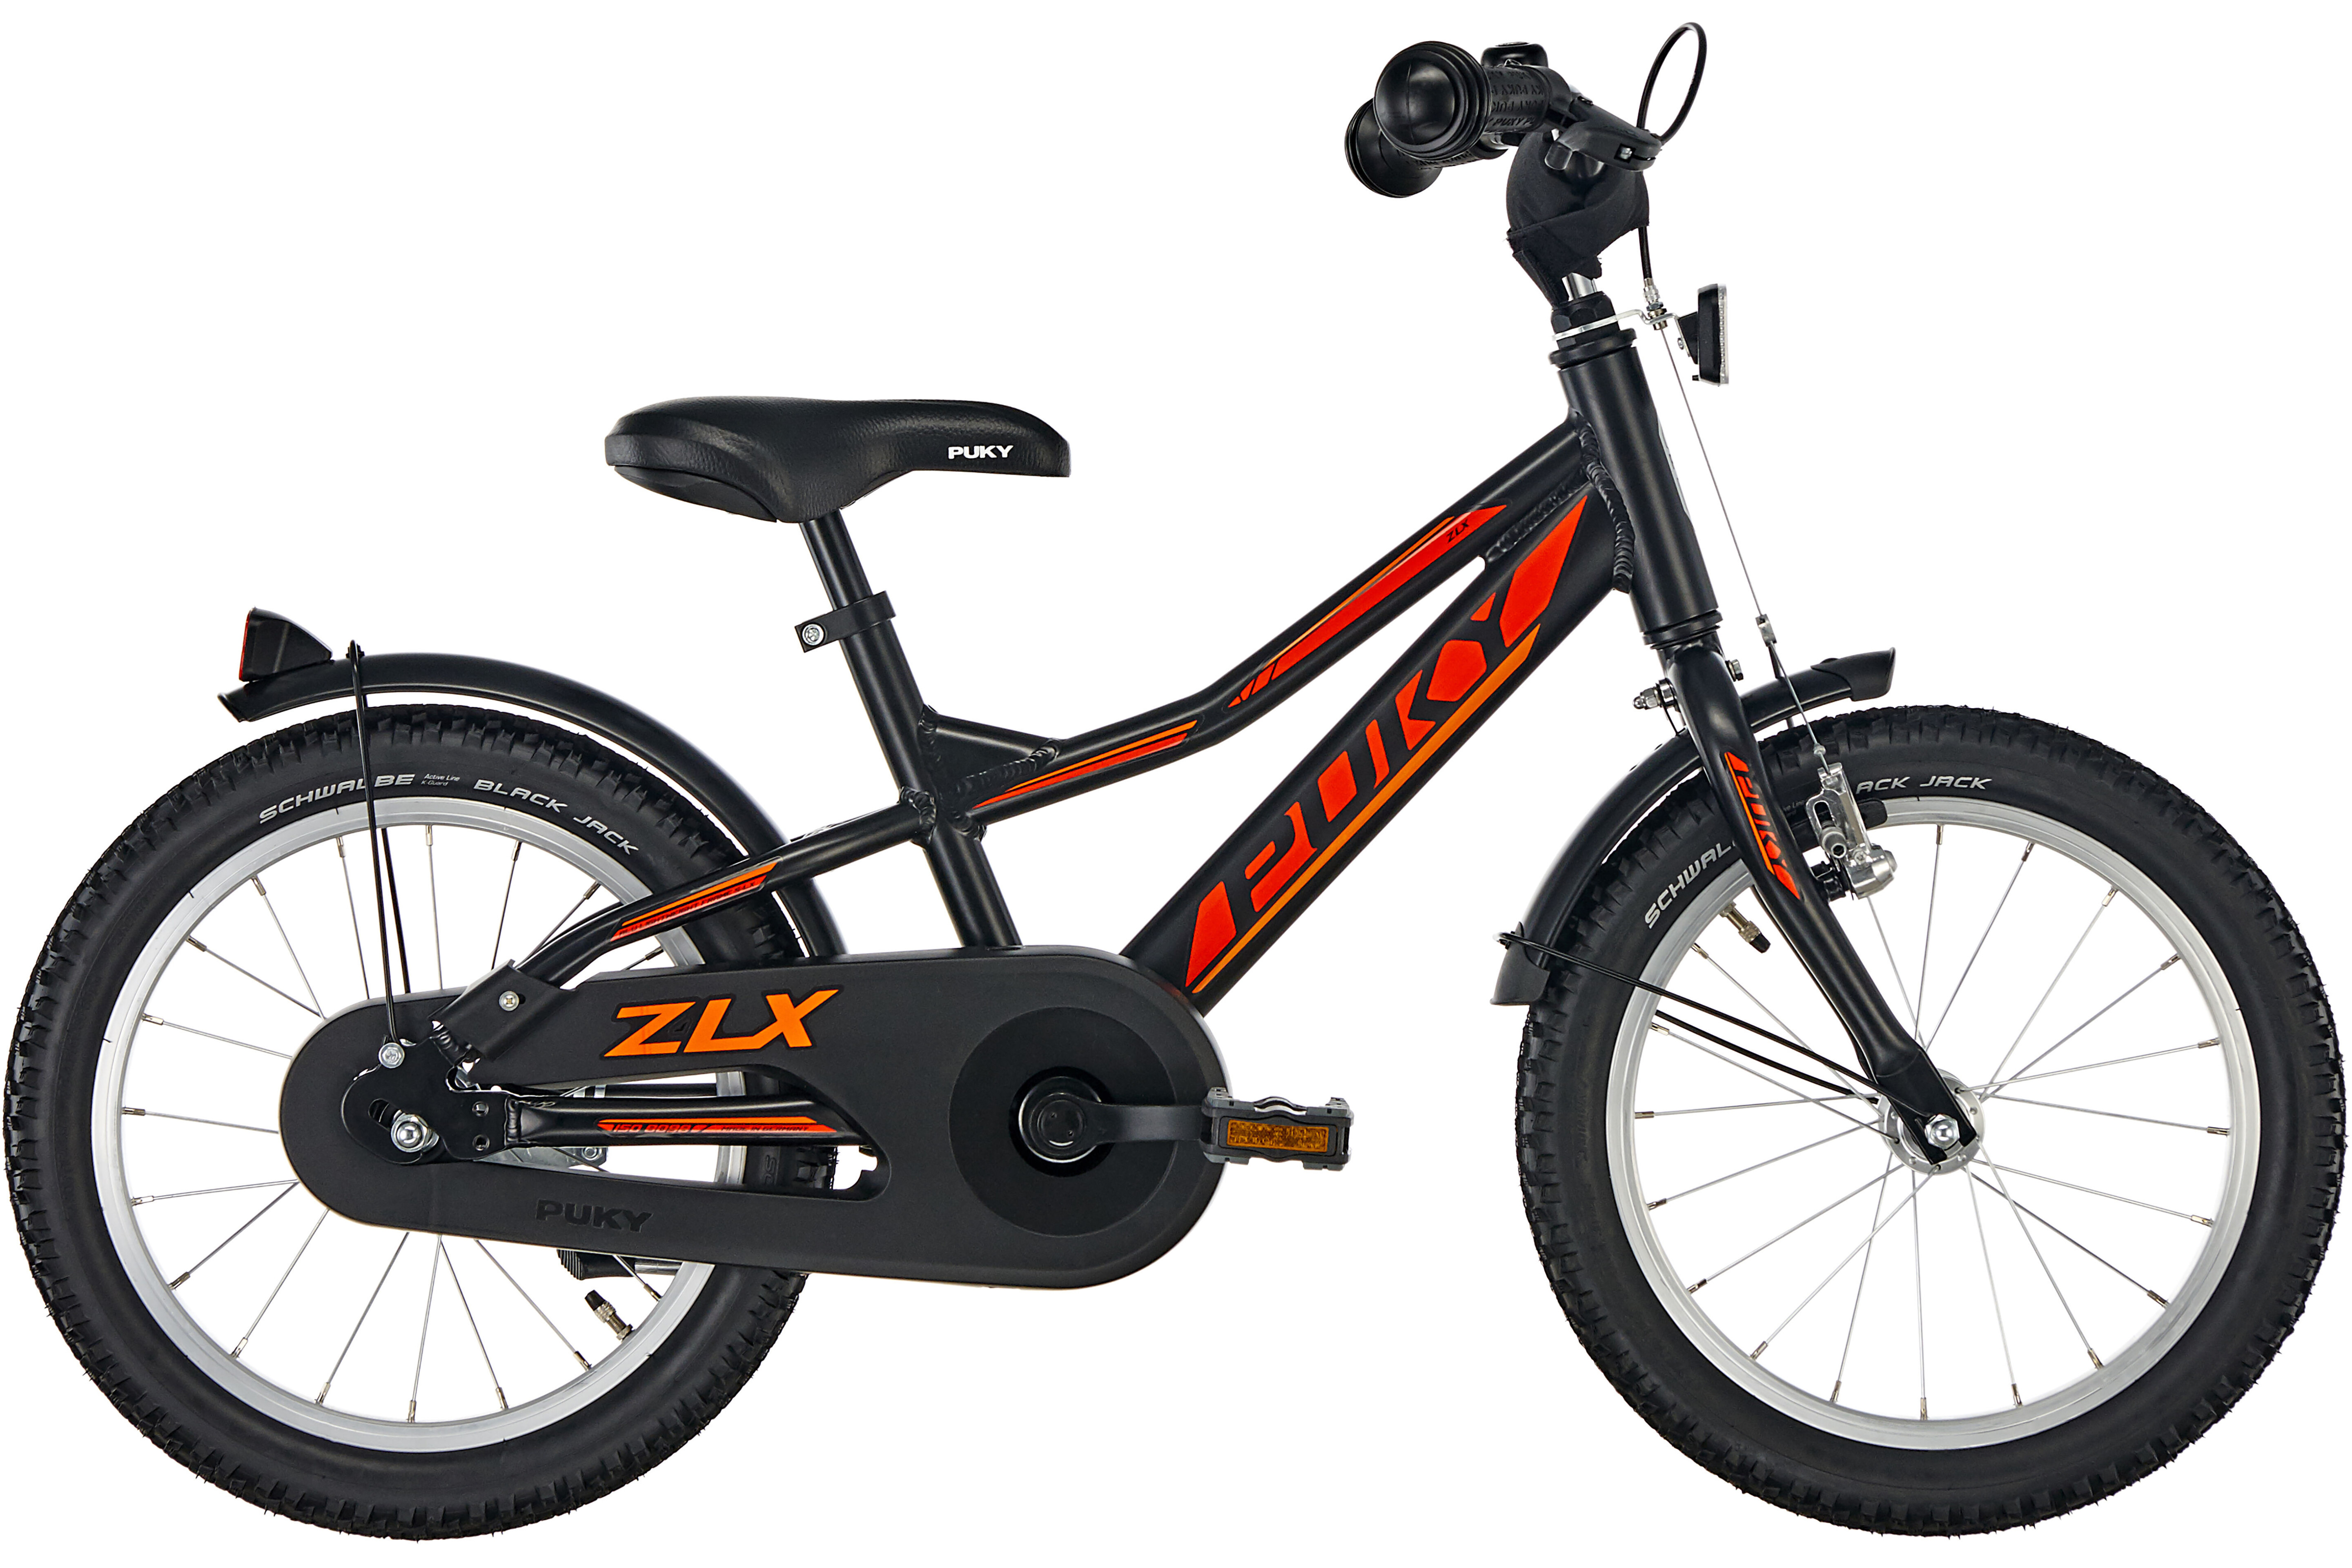 Puky ZLX 161 Kinderfahrrad schwarz online kaufen fahrrad.de